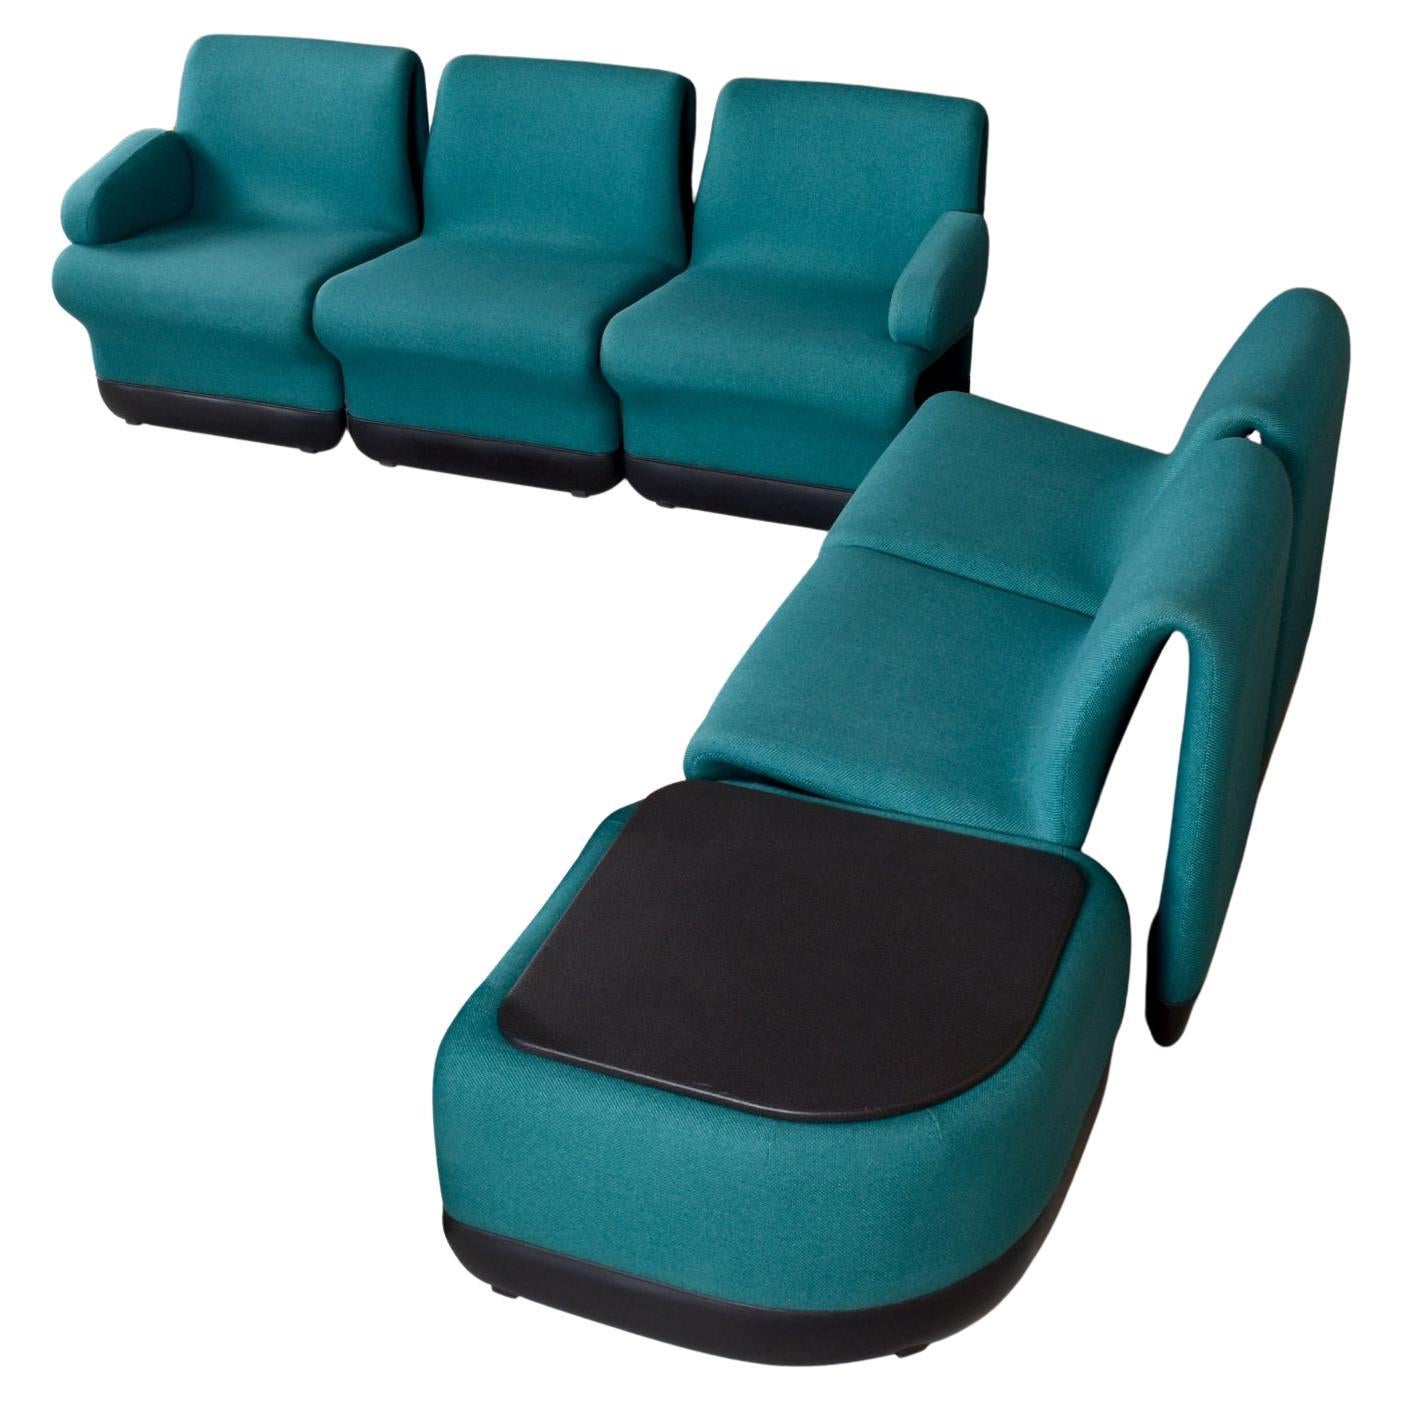 Ensemble de fauteuils de salon modulaires Ten Forward Star Trek TNG Paul Boulva pour Artopex en vente